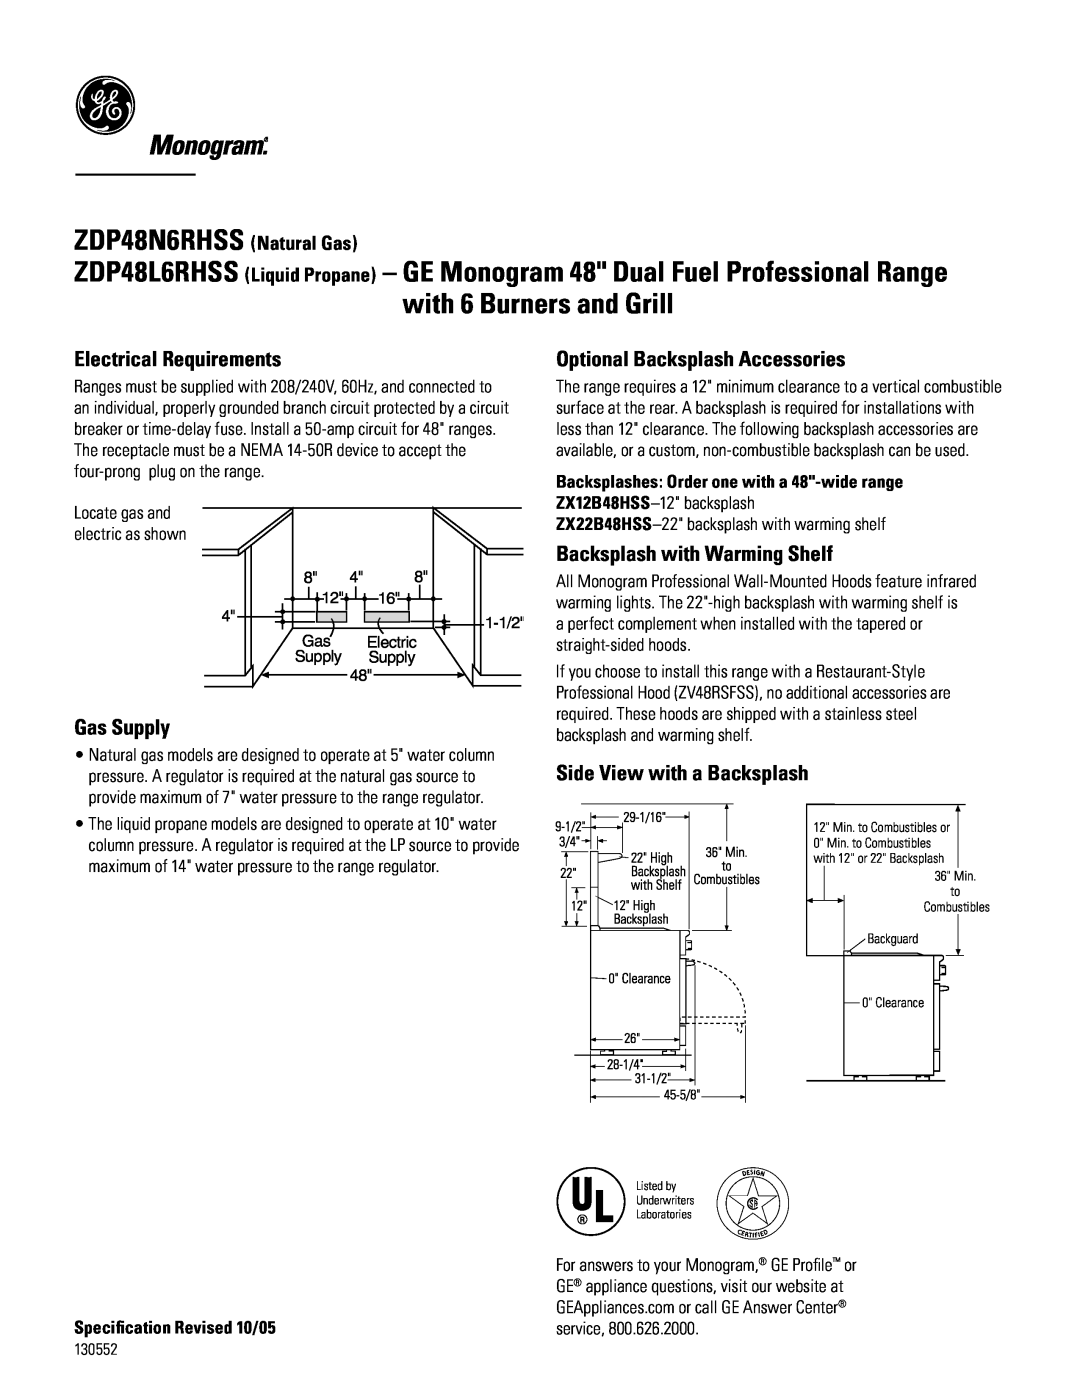 GE Monogram ZDP48L6RHSS6 Electrical Requirements, Gas Supply, Optional Backsplash Accessories, Side View with a Backsplash 